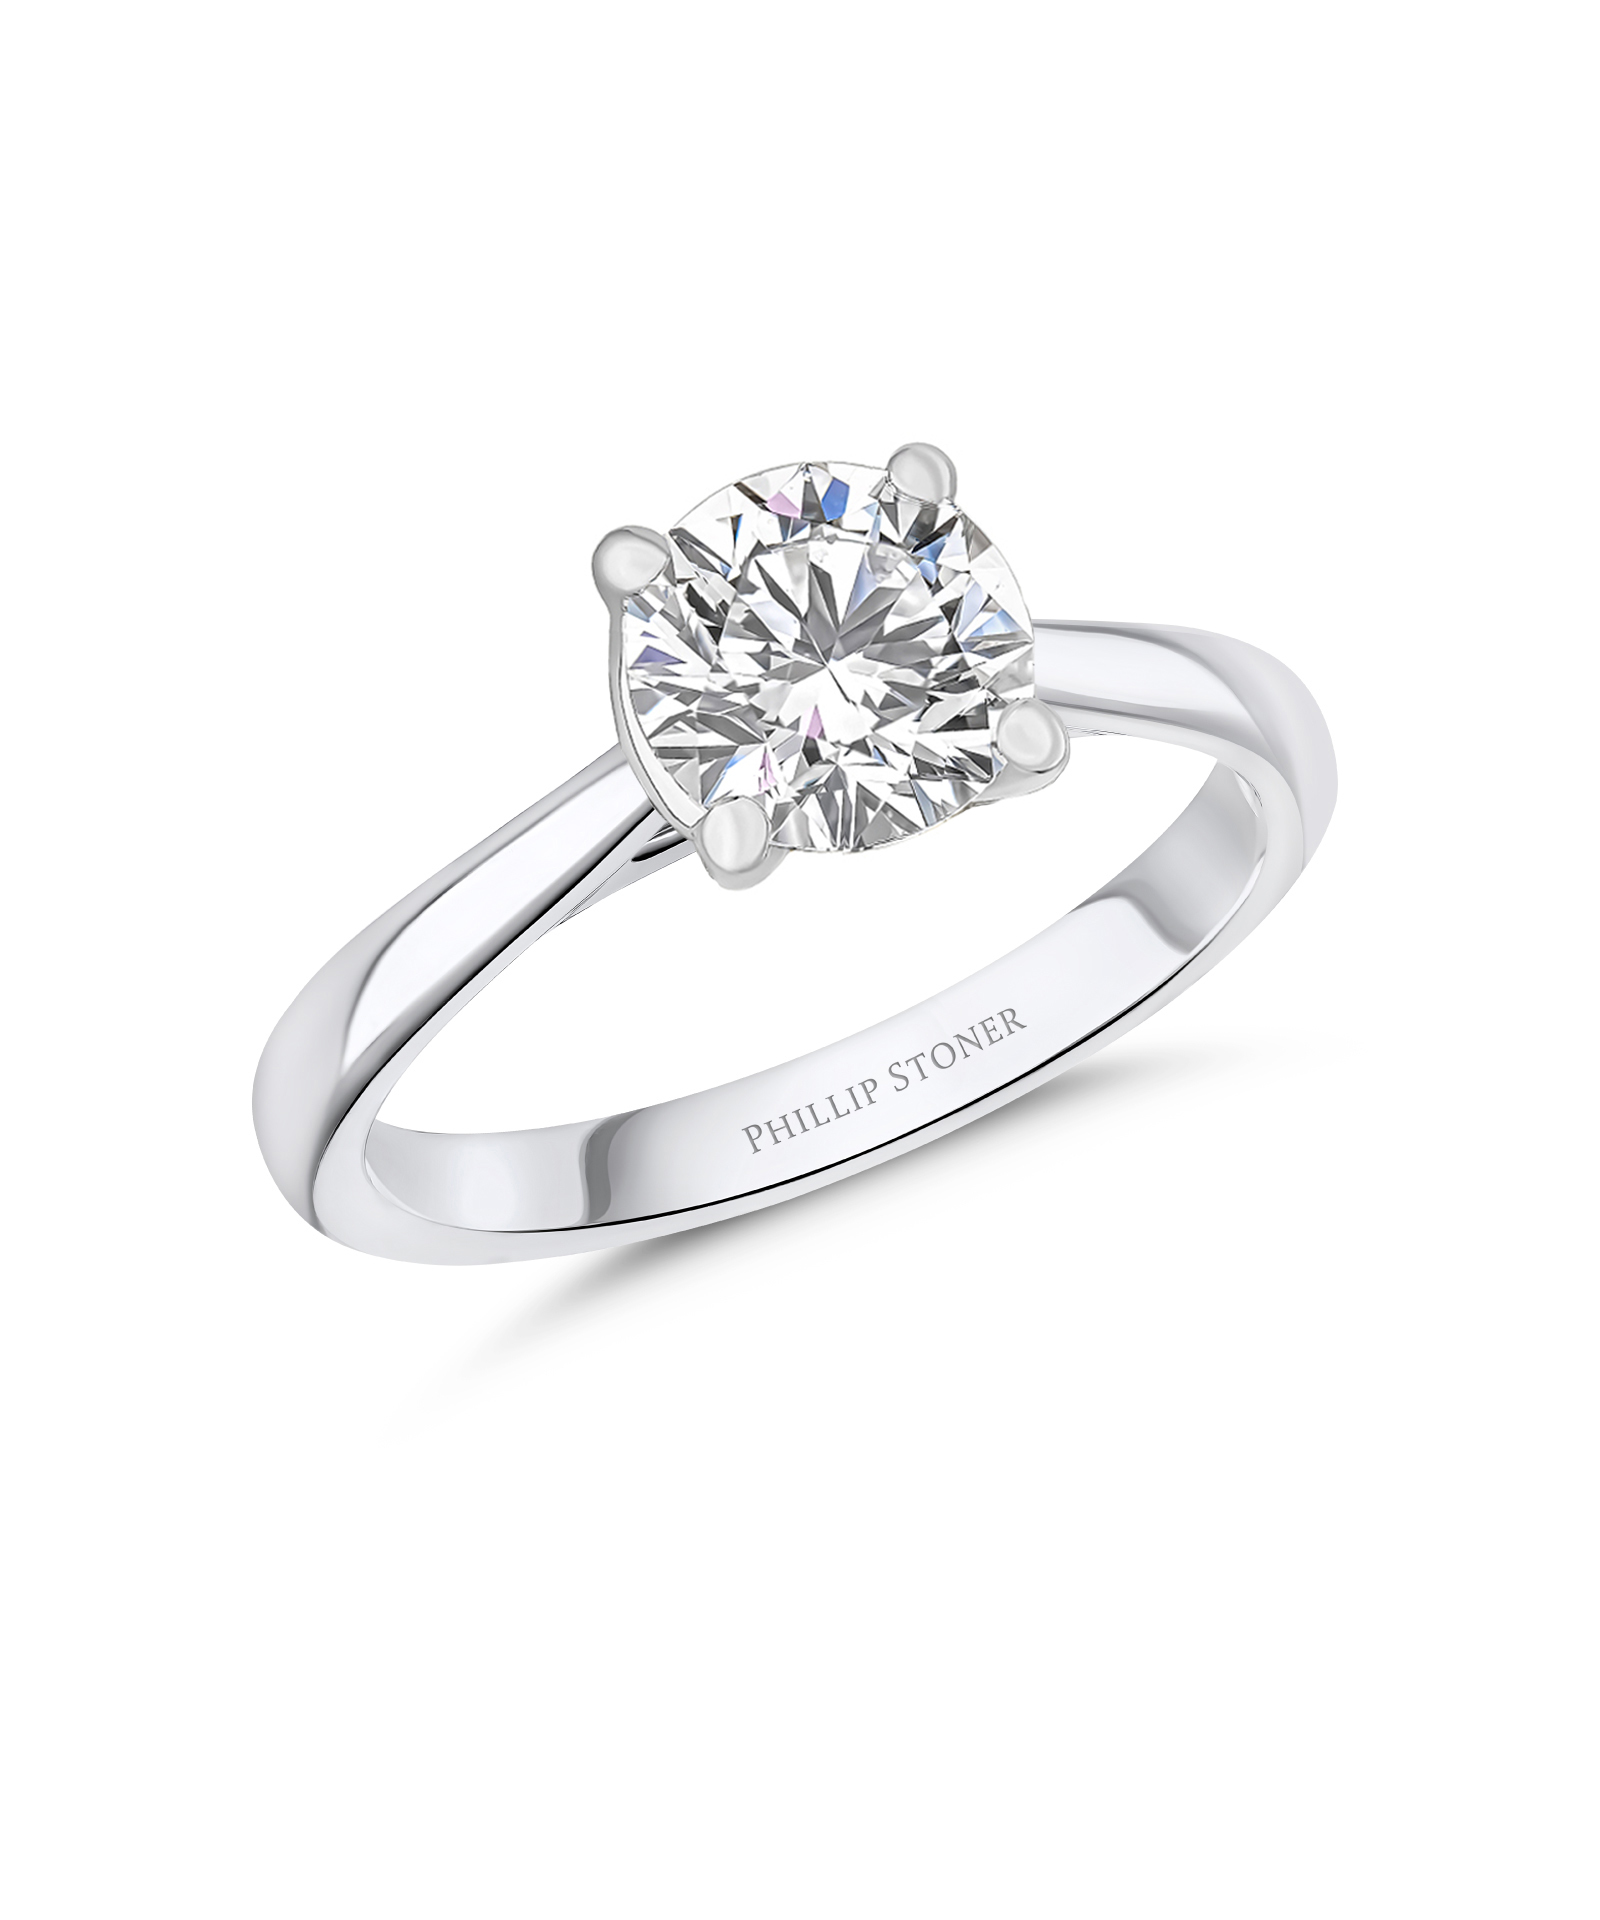 1.50ct Round Brilliant Cut Diamond Single Stone Engagement Ring - Phillip Stoner The Jeweller